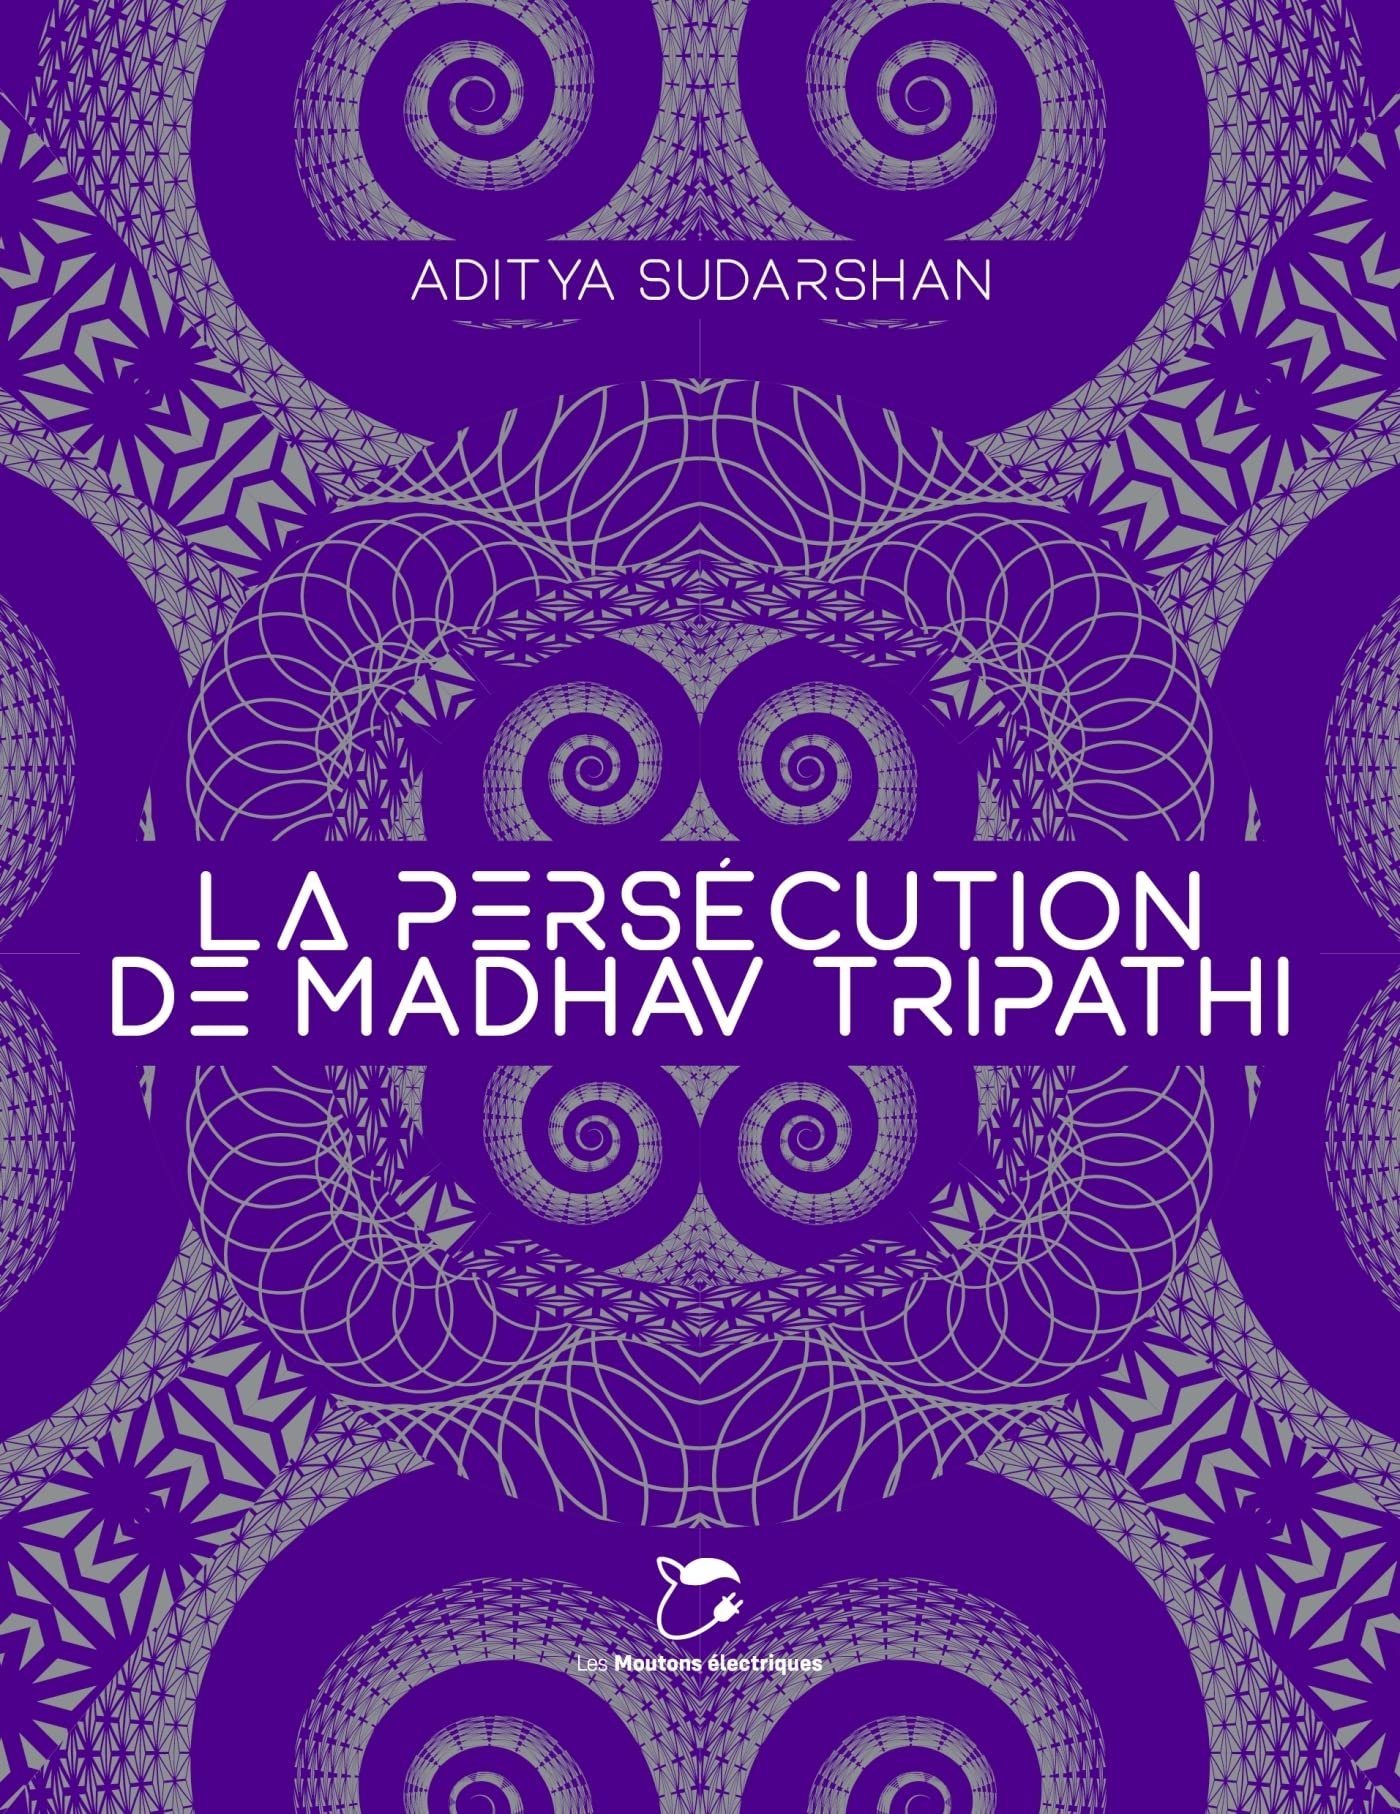 Aditya Sudarshan – La persécution de Madhav Tripathi